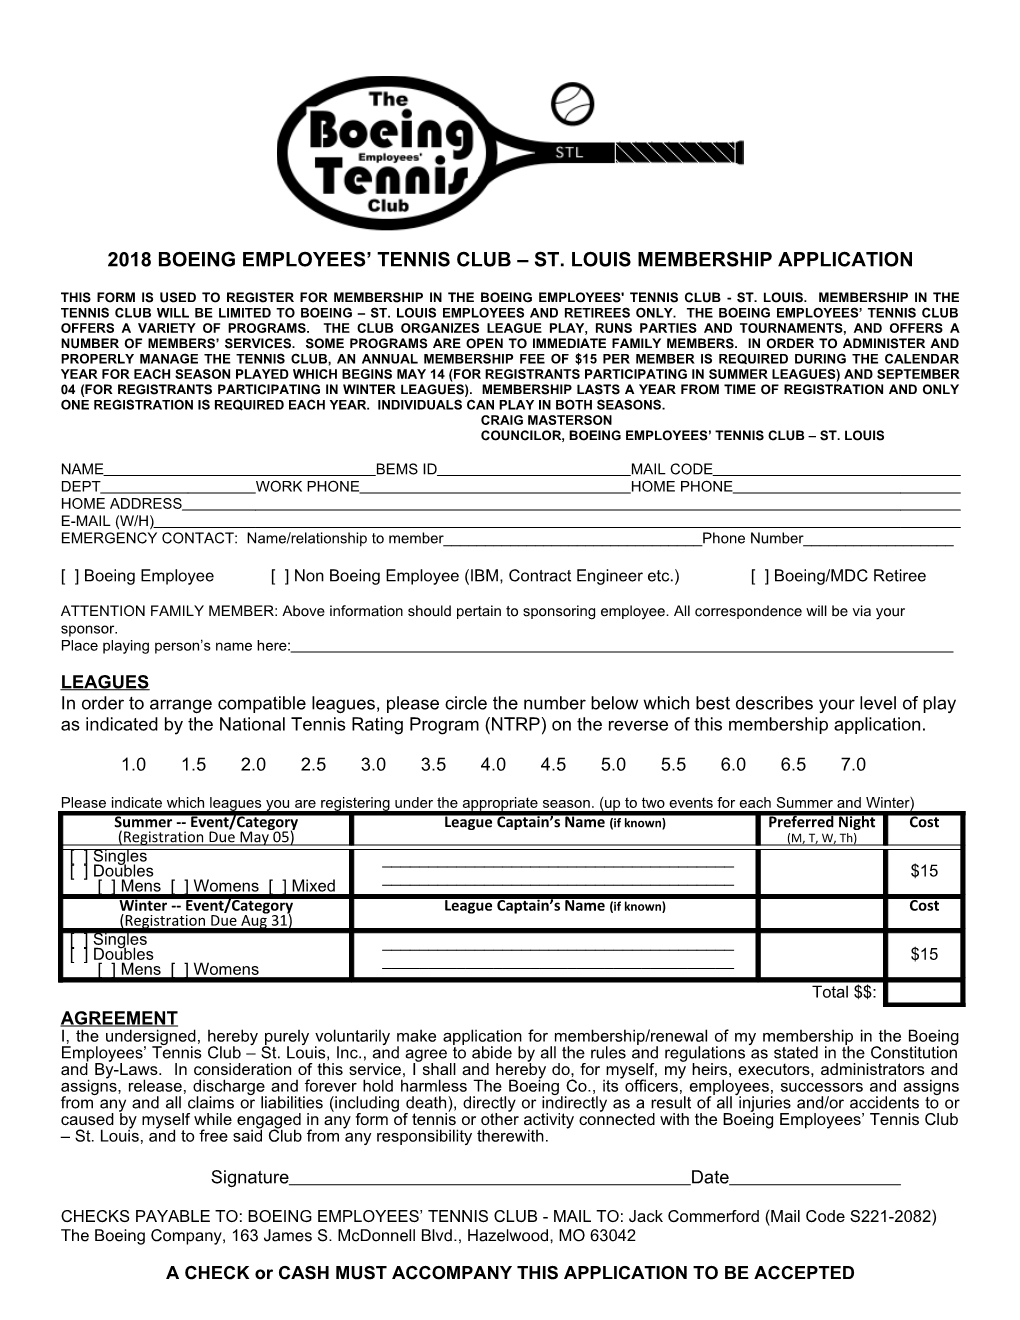 2018 Boeing Employees Tennis Club St. Louis Membership Application